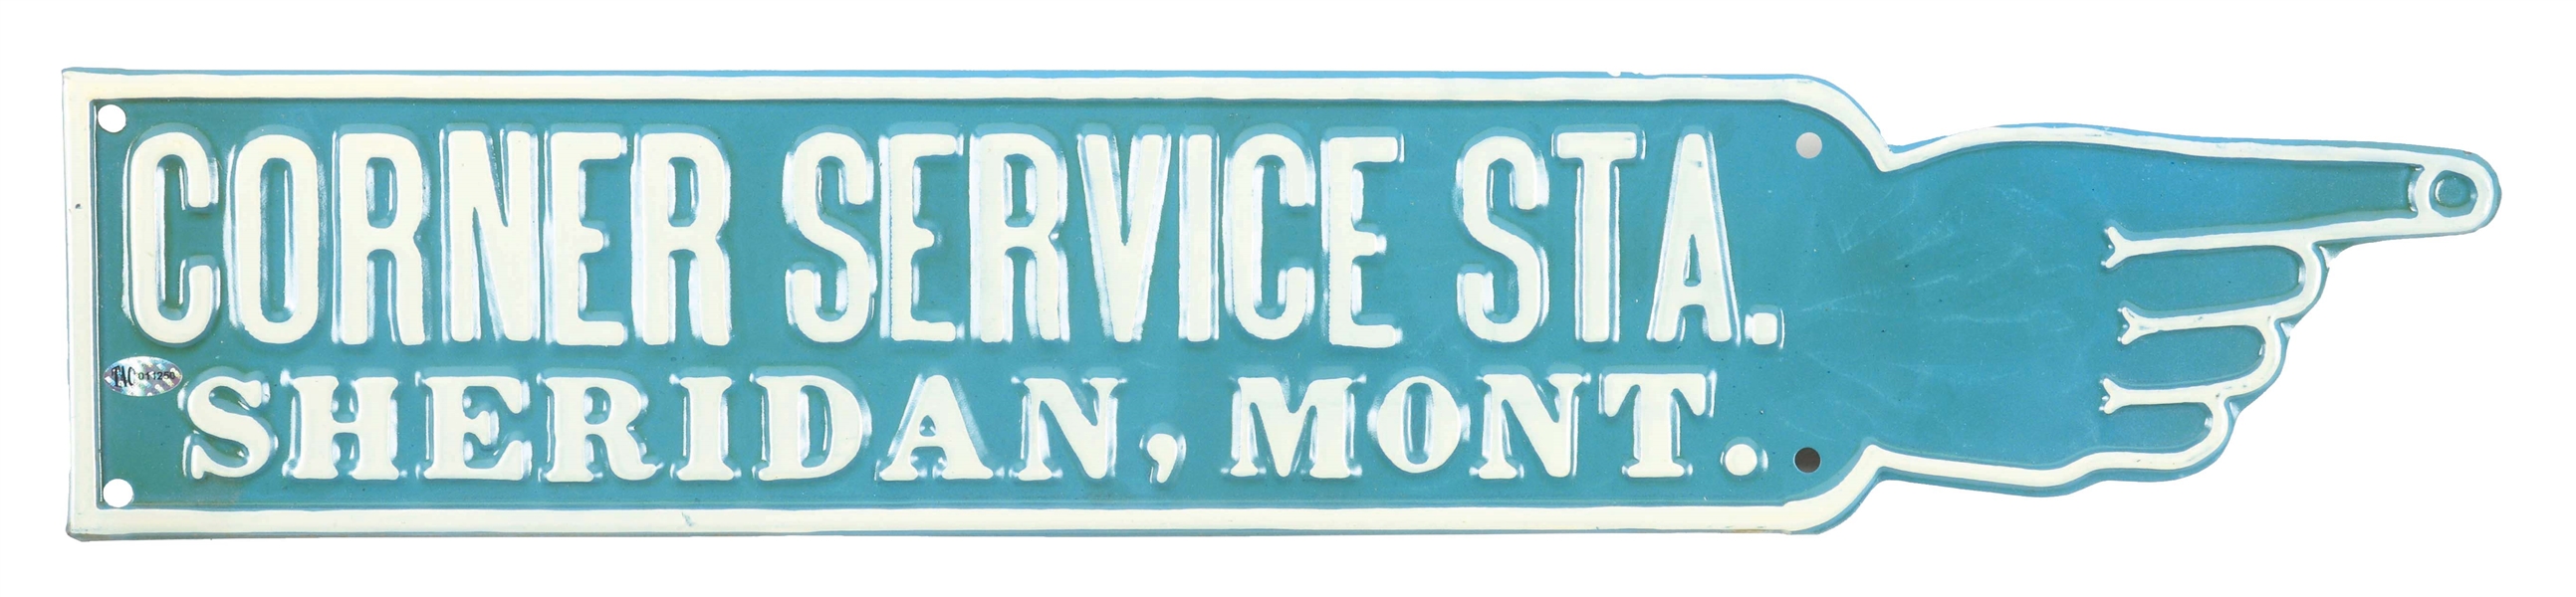 CORNER SERVICE STATION SHERIDAN MONTANA N.O.S. FINGER POINTER SIGN. 